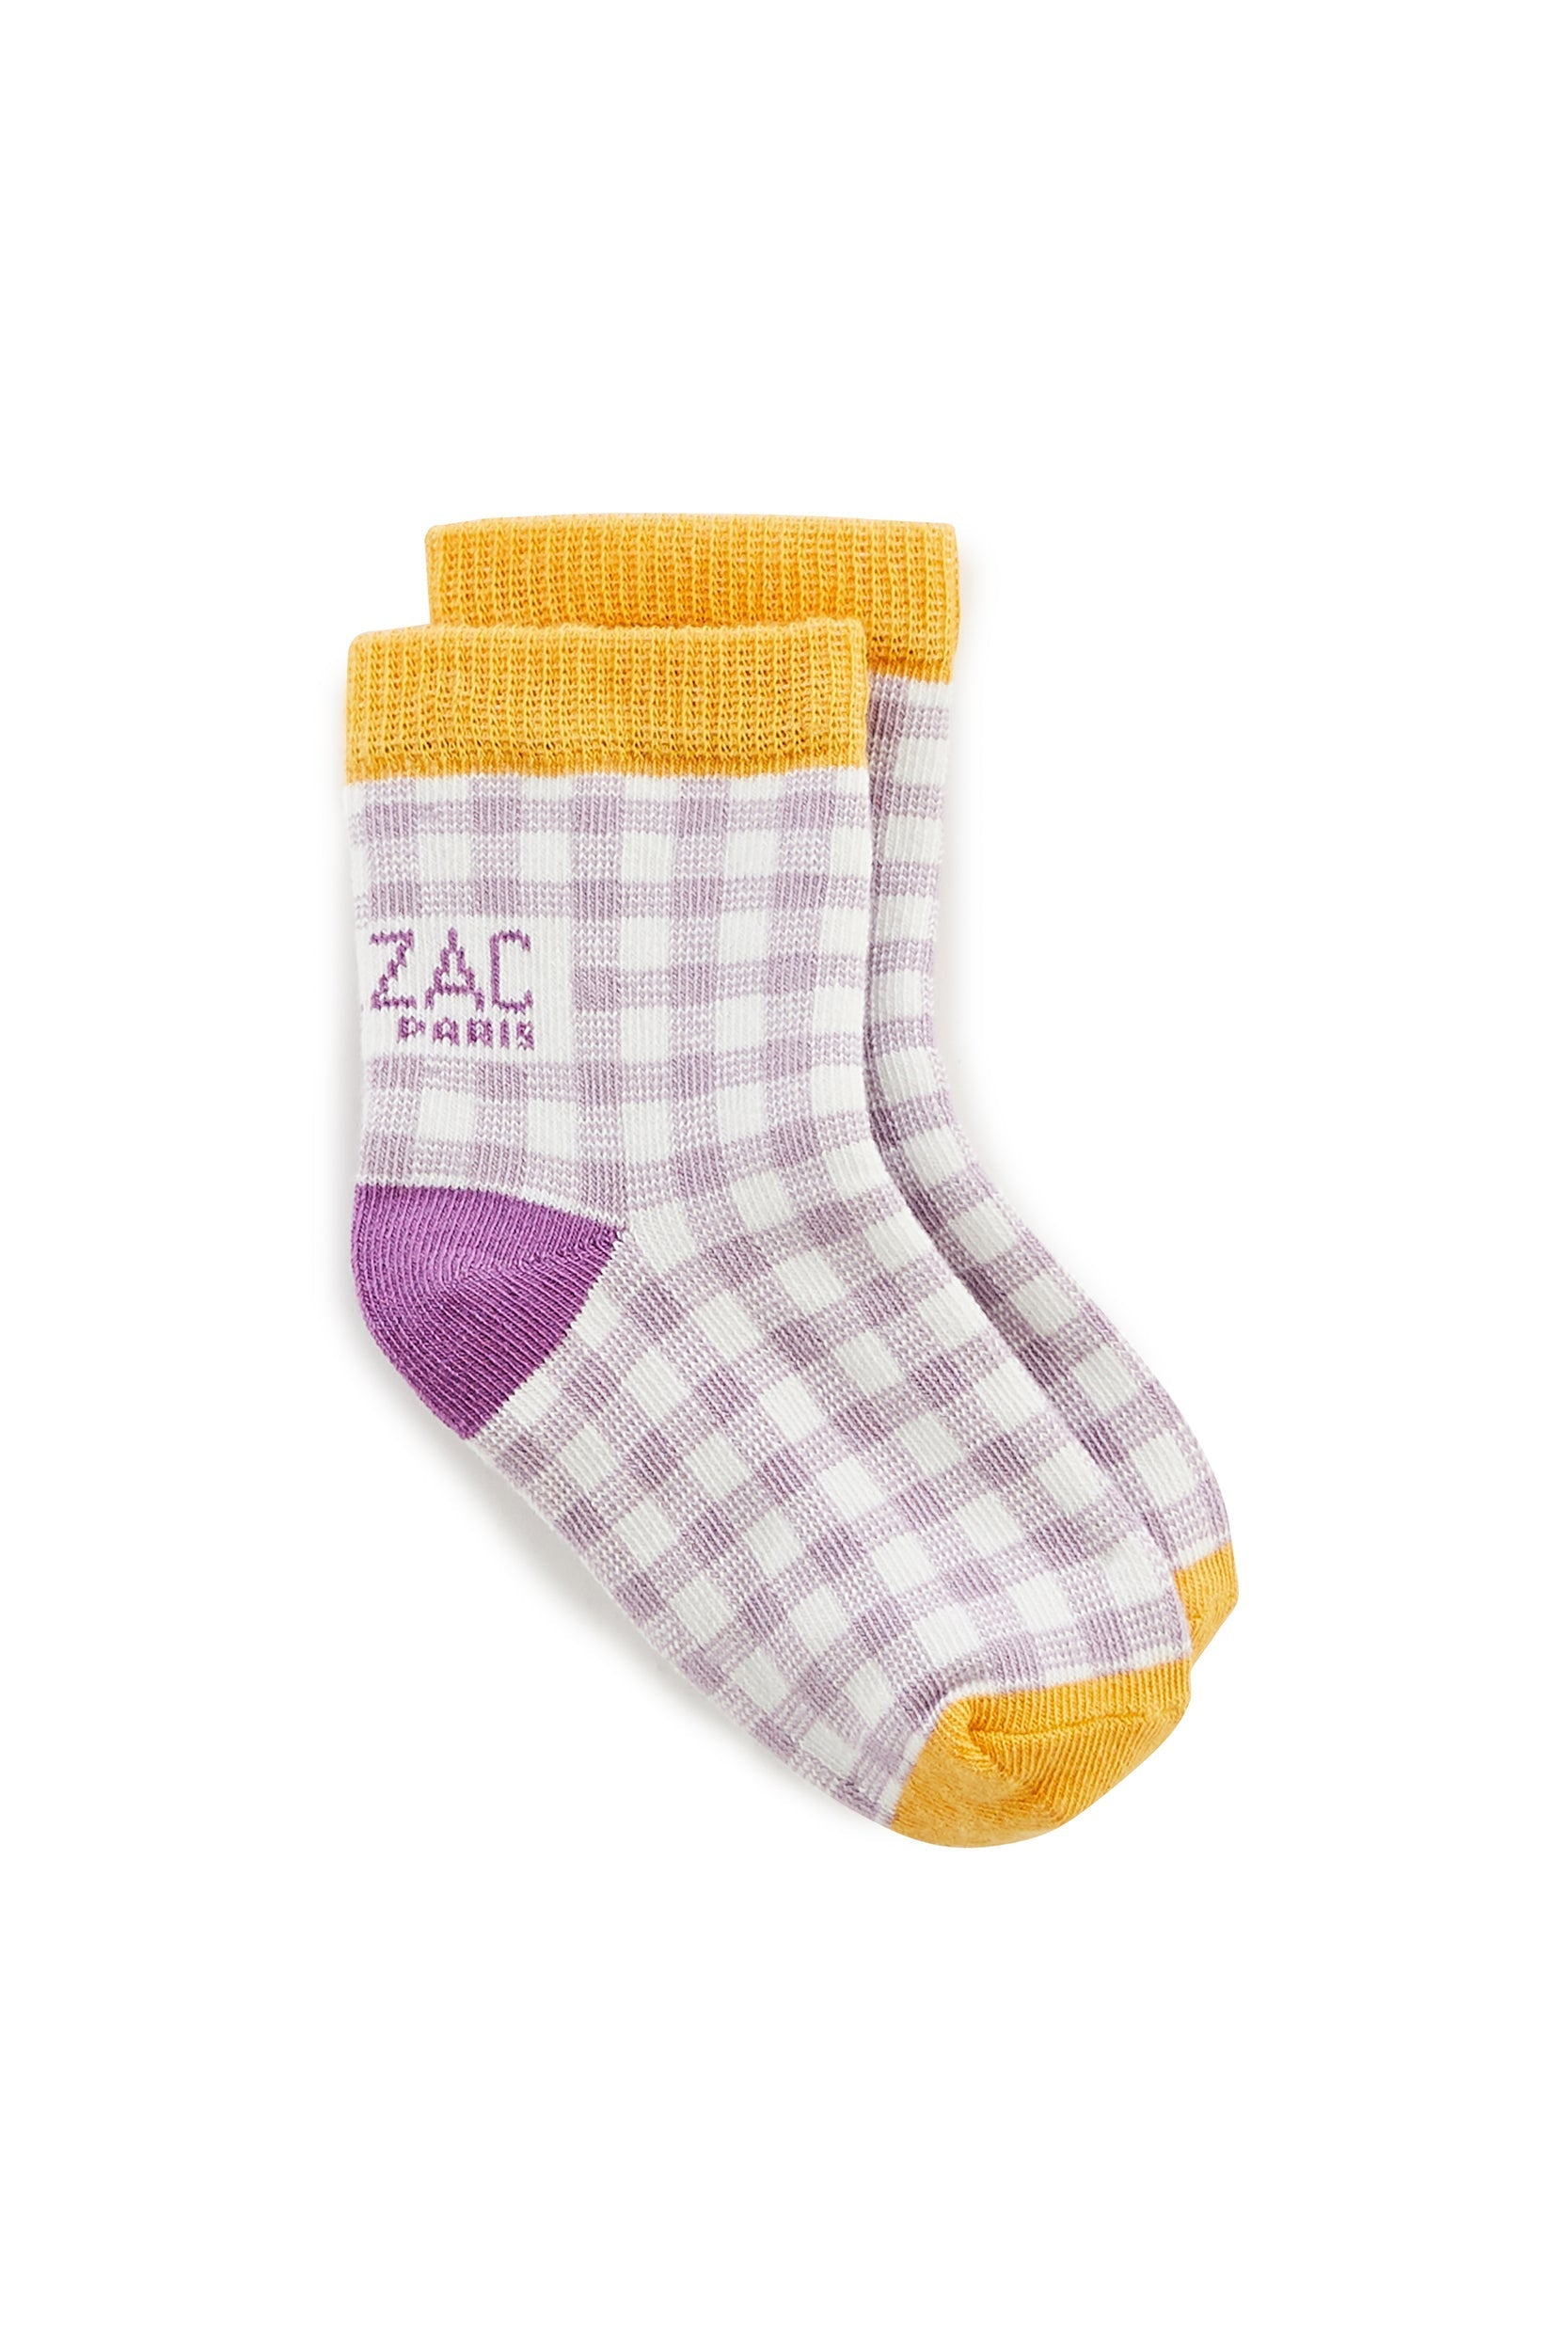 Fricadelle purple check socks